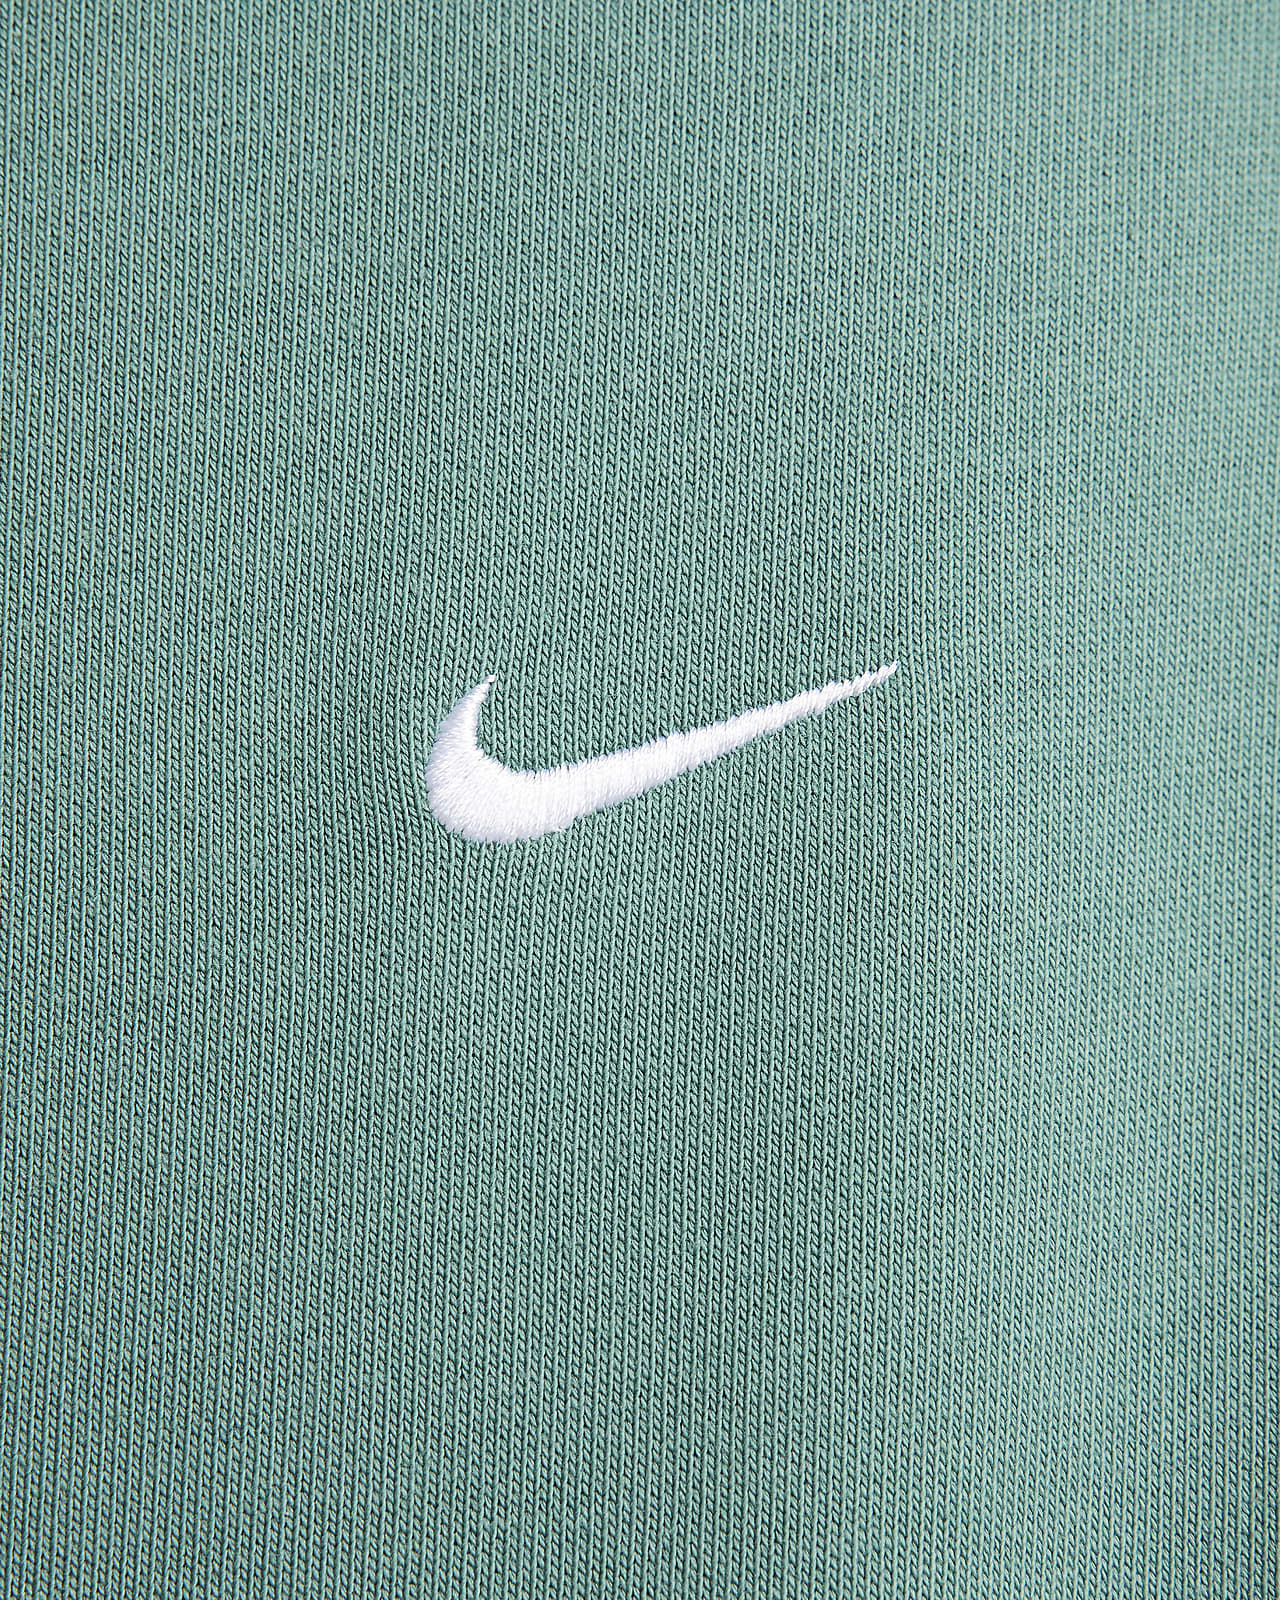 Nike Solo Swoosh Fleece Pullover Hoodie Grey - BIRCH HEATHER/WHITE